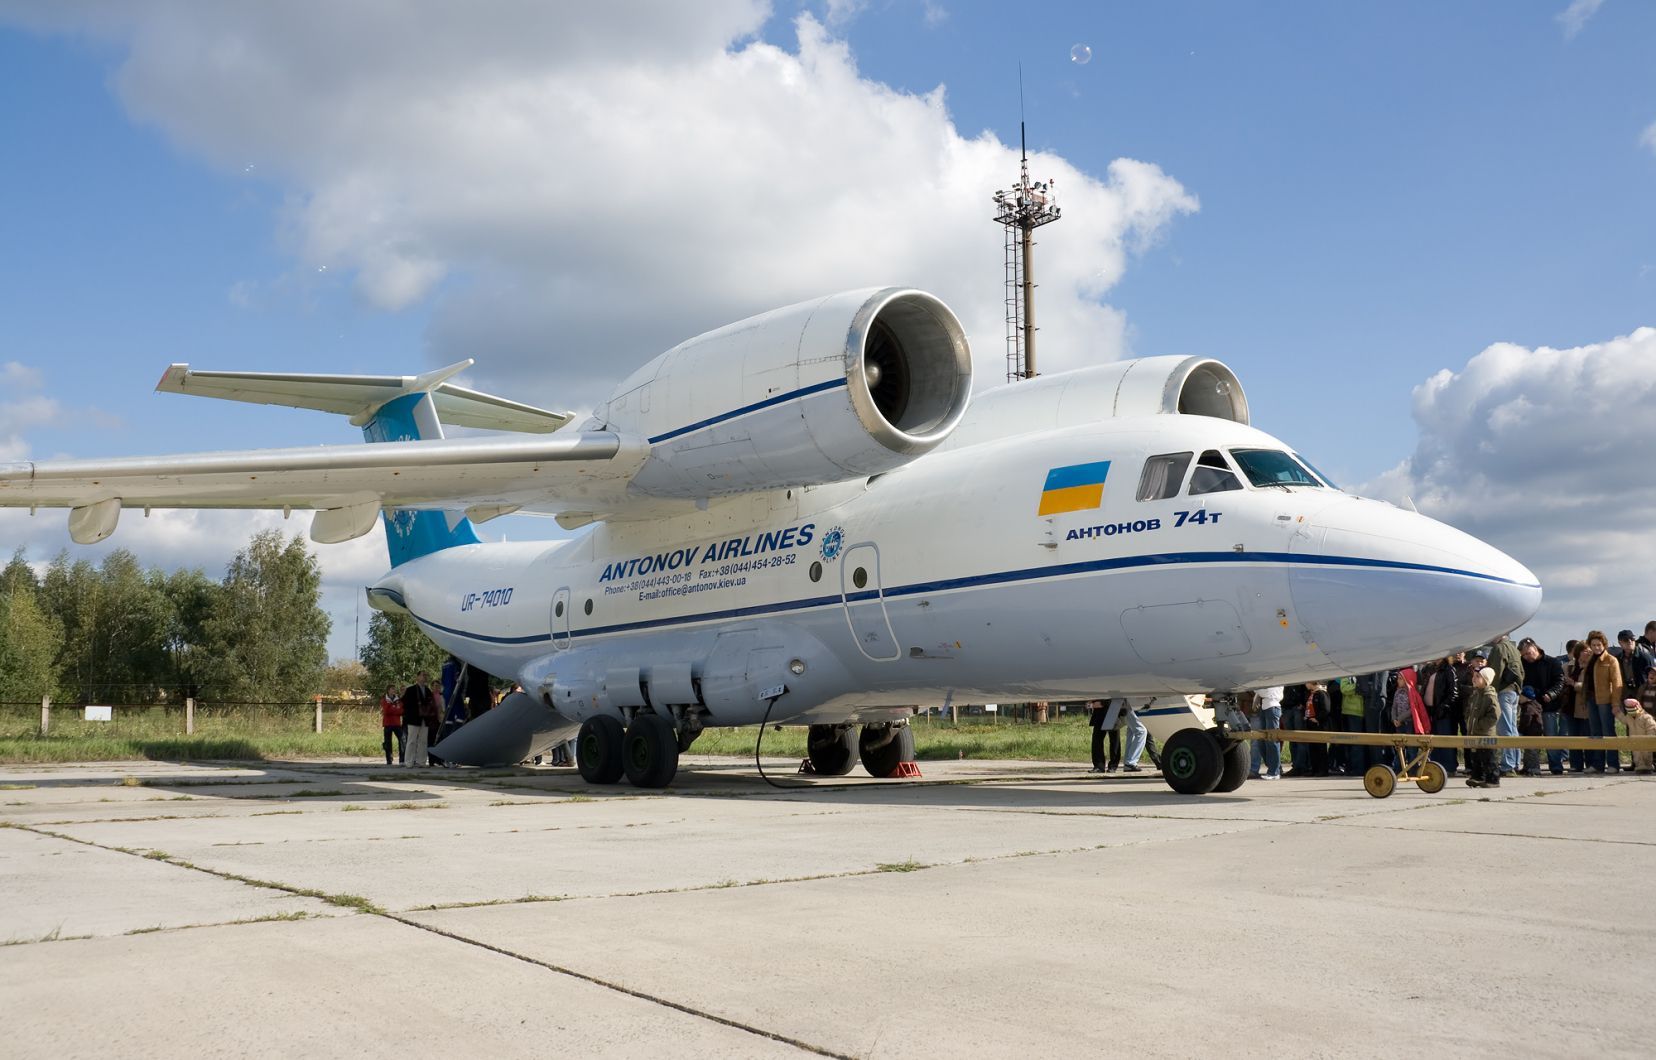 Antonov wants to land in Quebec